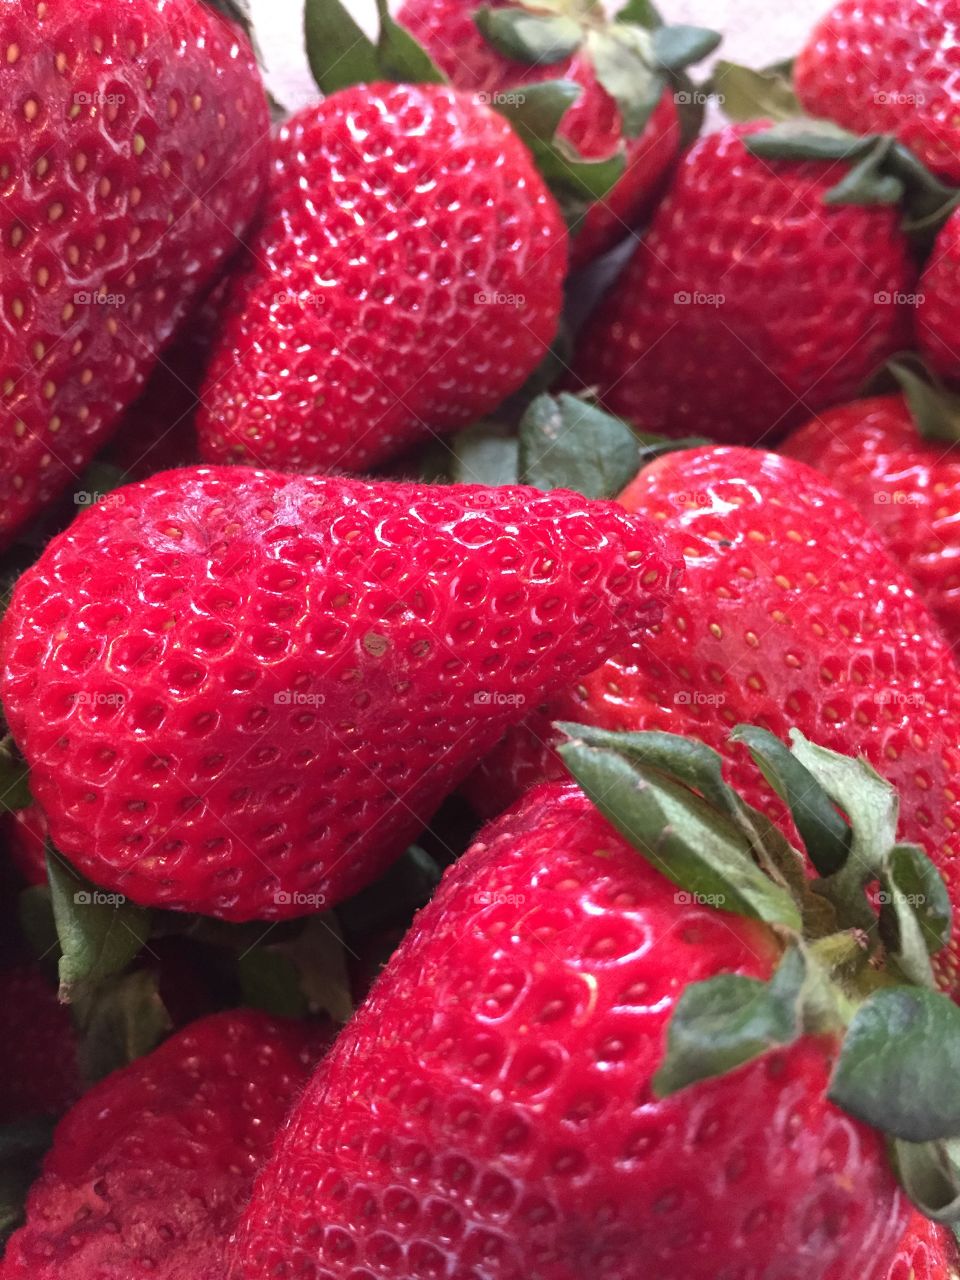 Big juicy strawberries, yummy!